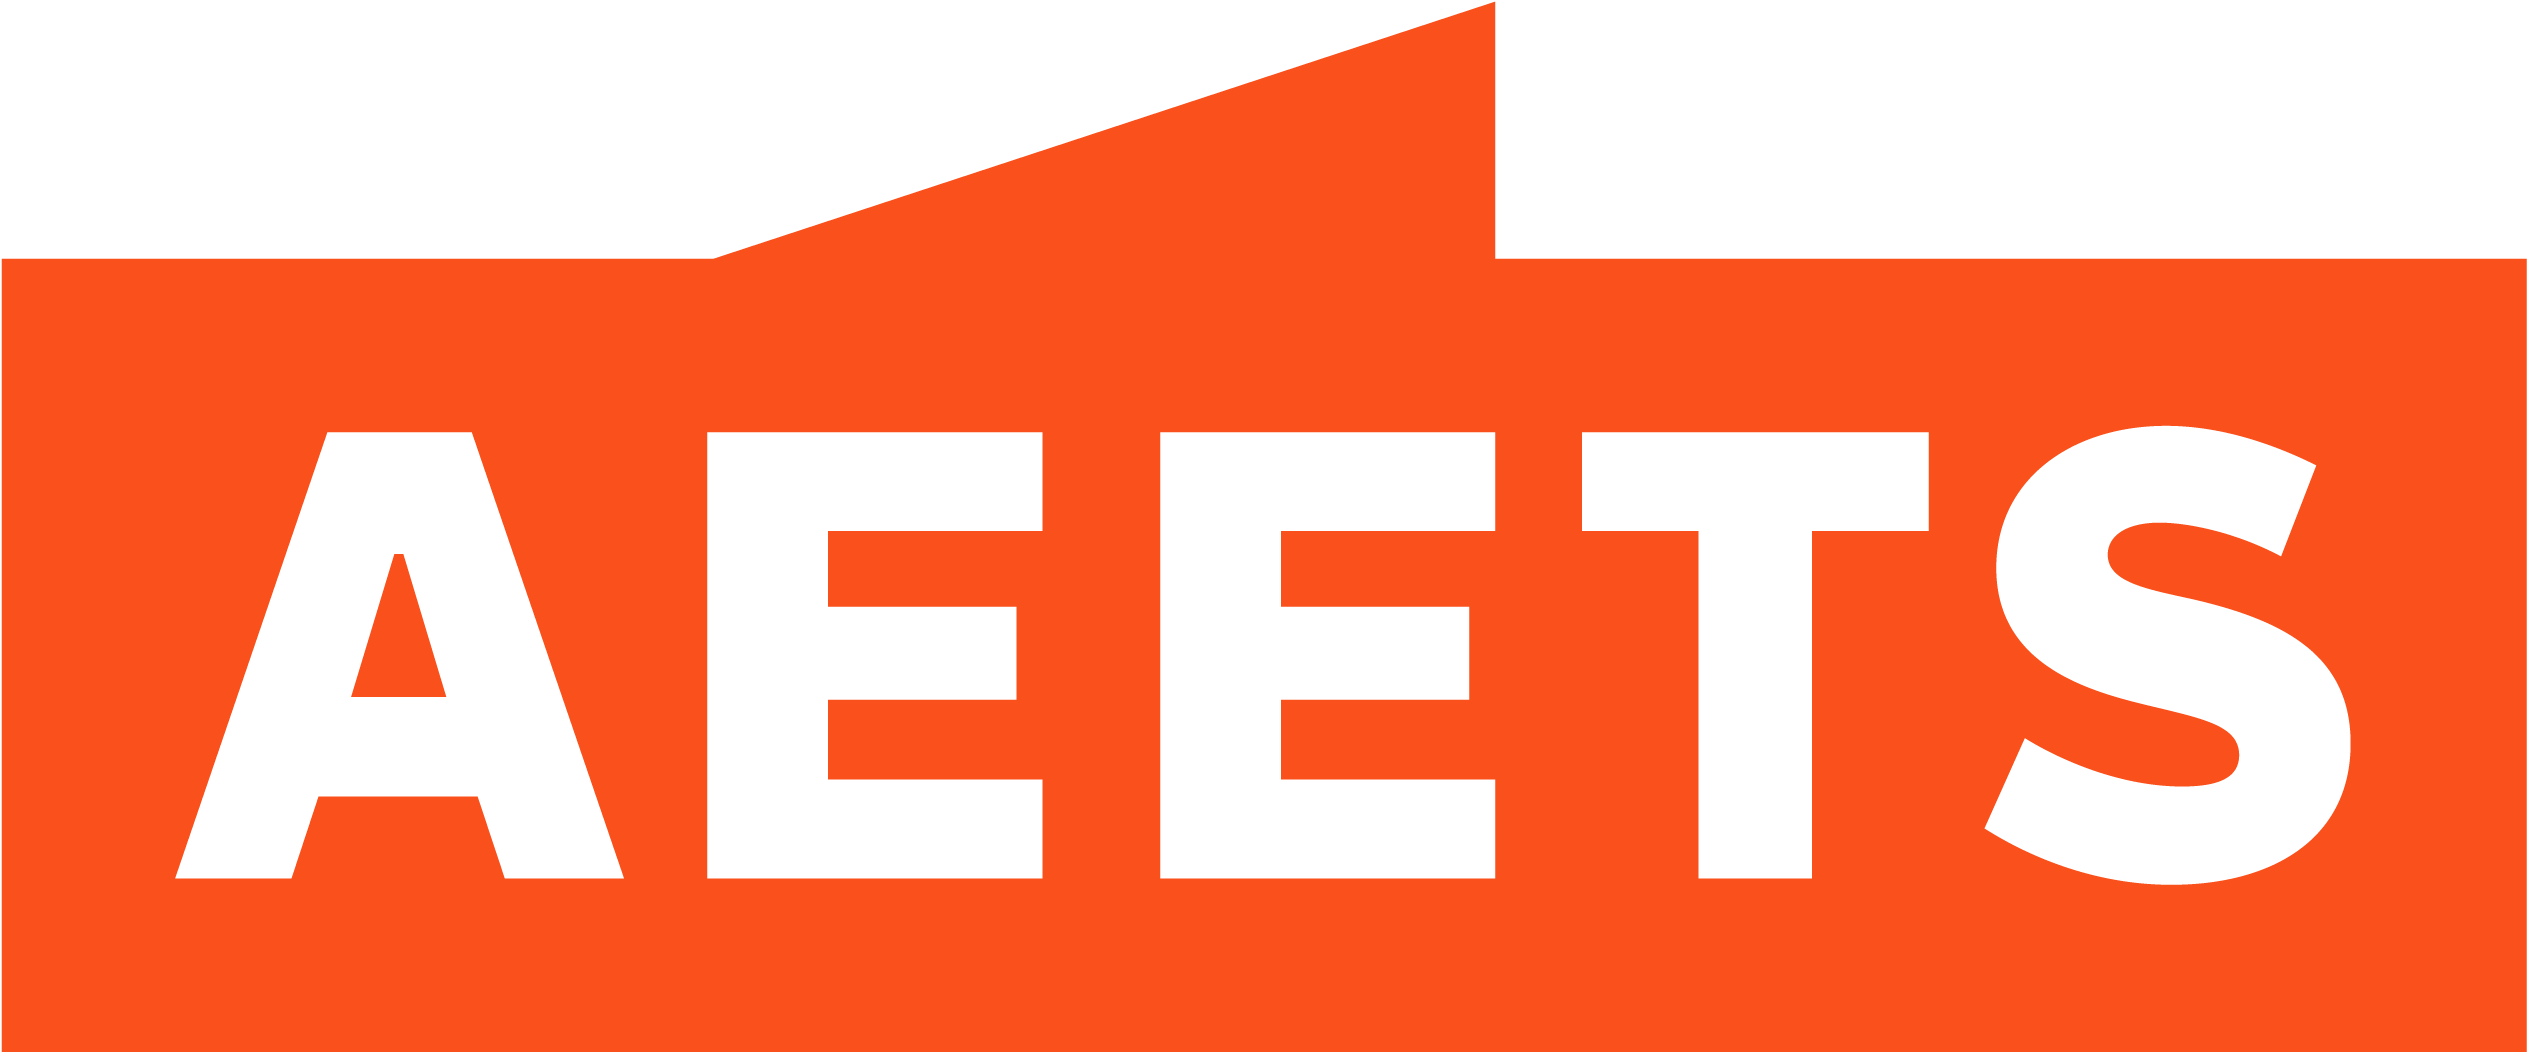 Aeets Logo Symbole Orange Rgb Hr - Aeets Logo (4110x2379)